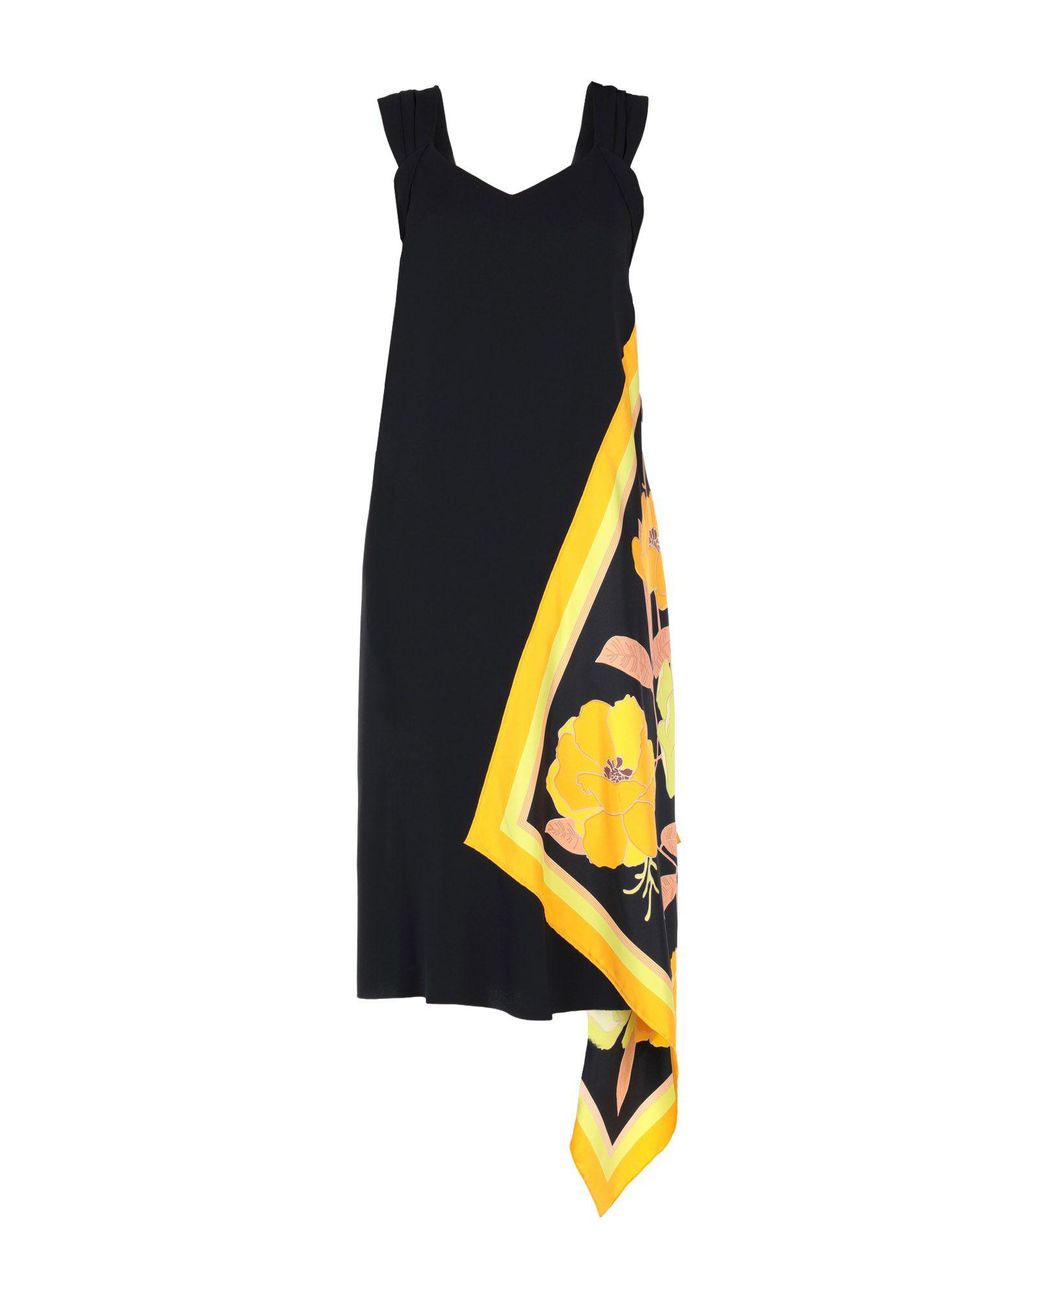 Dries Van Noten Synthetic 3/4 Length Dress in Black - Lyst